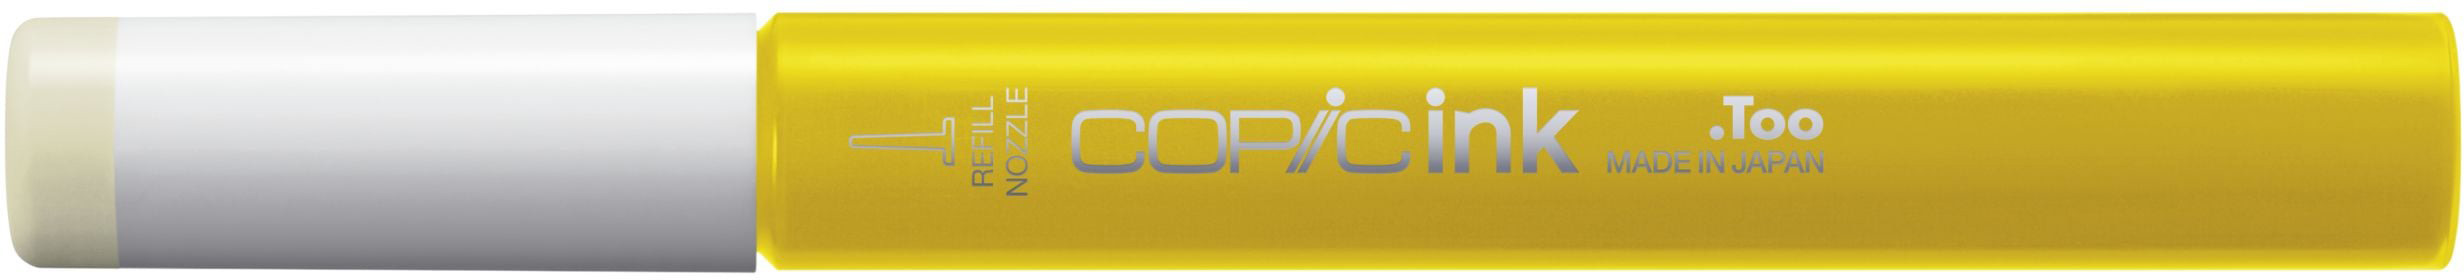 COPIC Ink Refill 21076144 Y00 - Barium Yellow